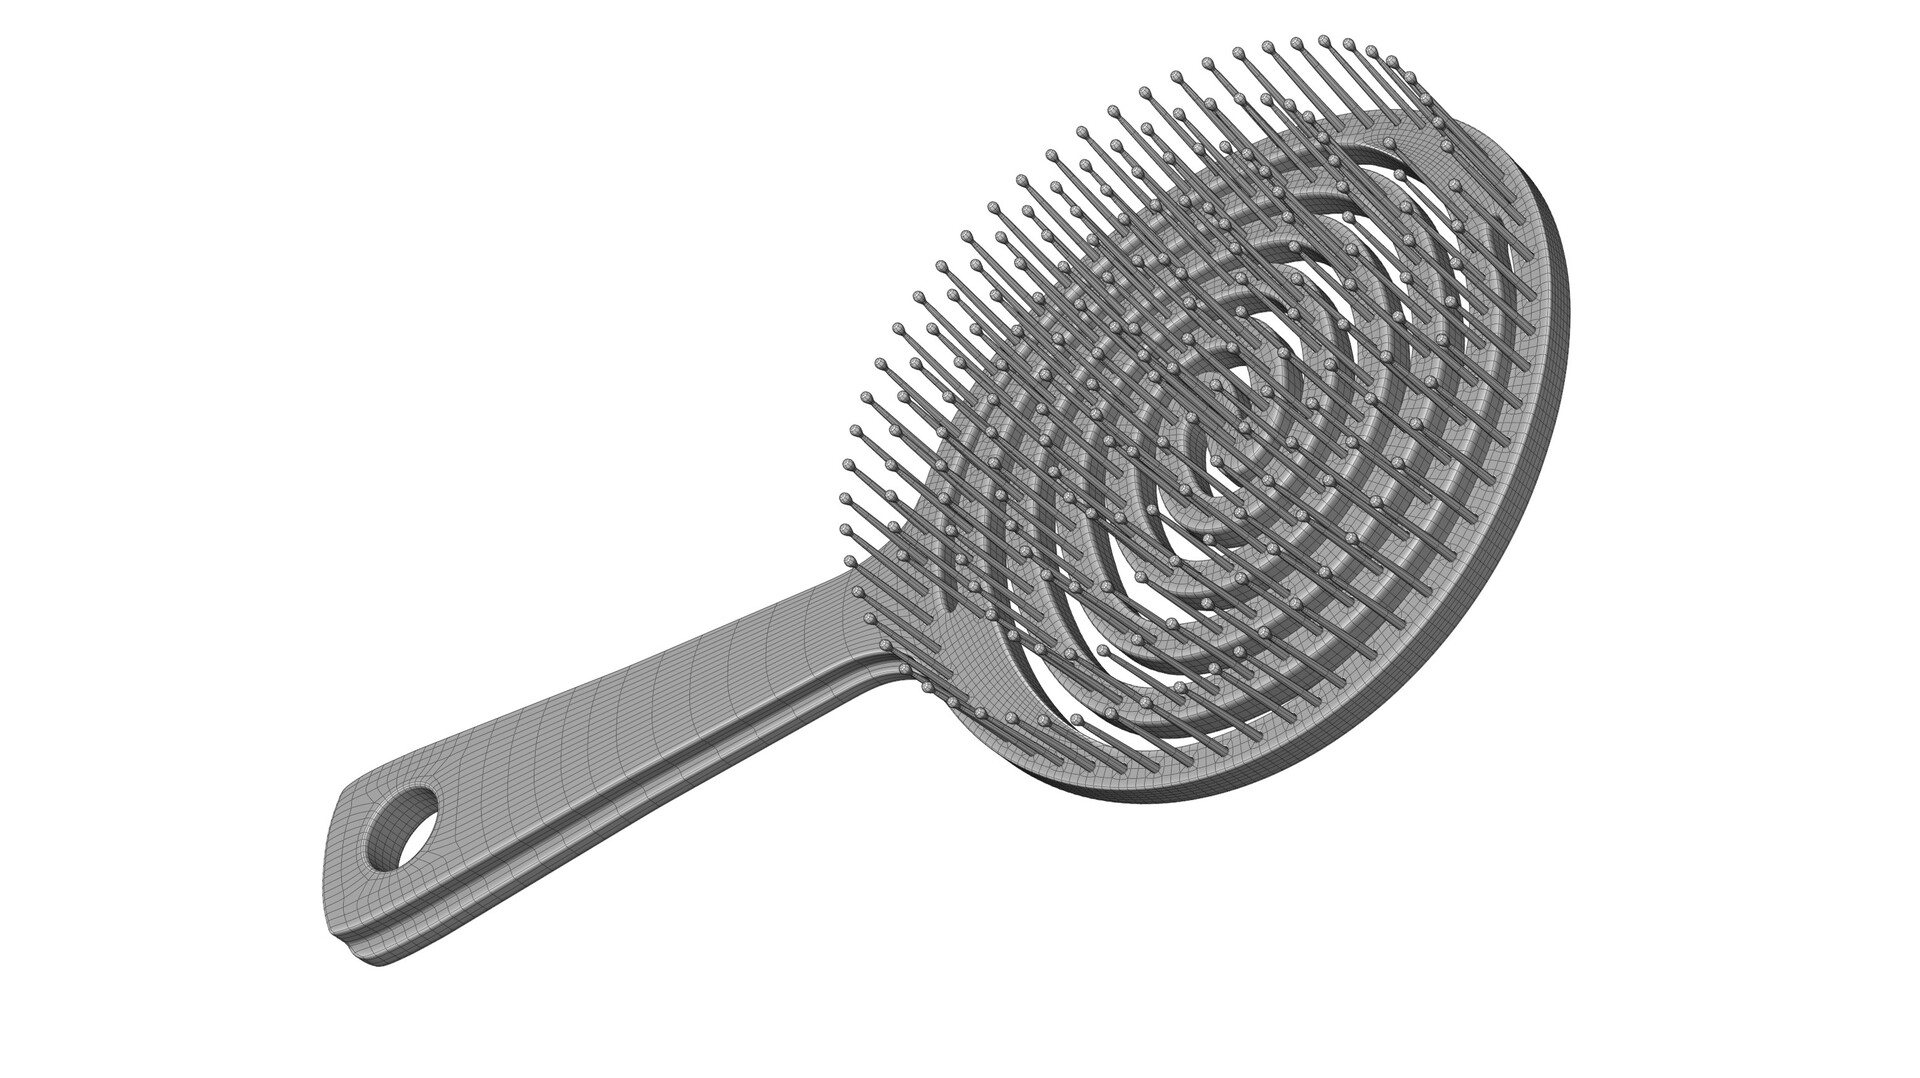 ArtStation - Hair Brush